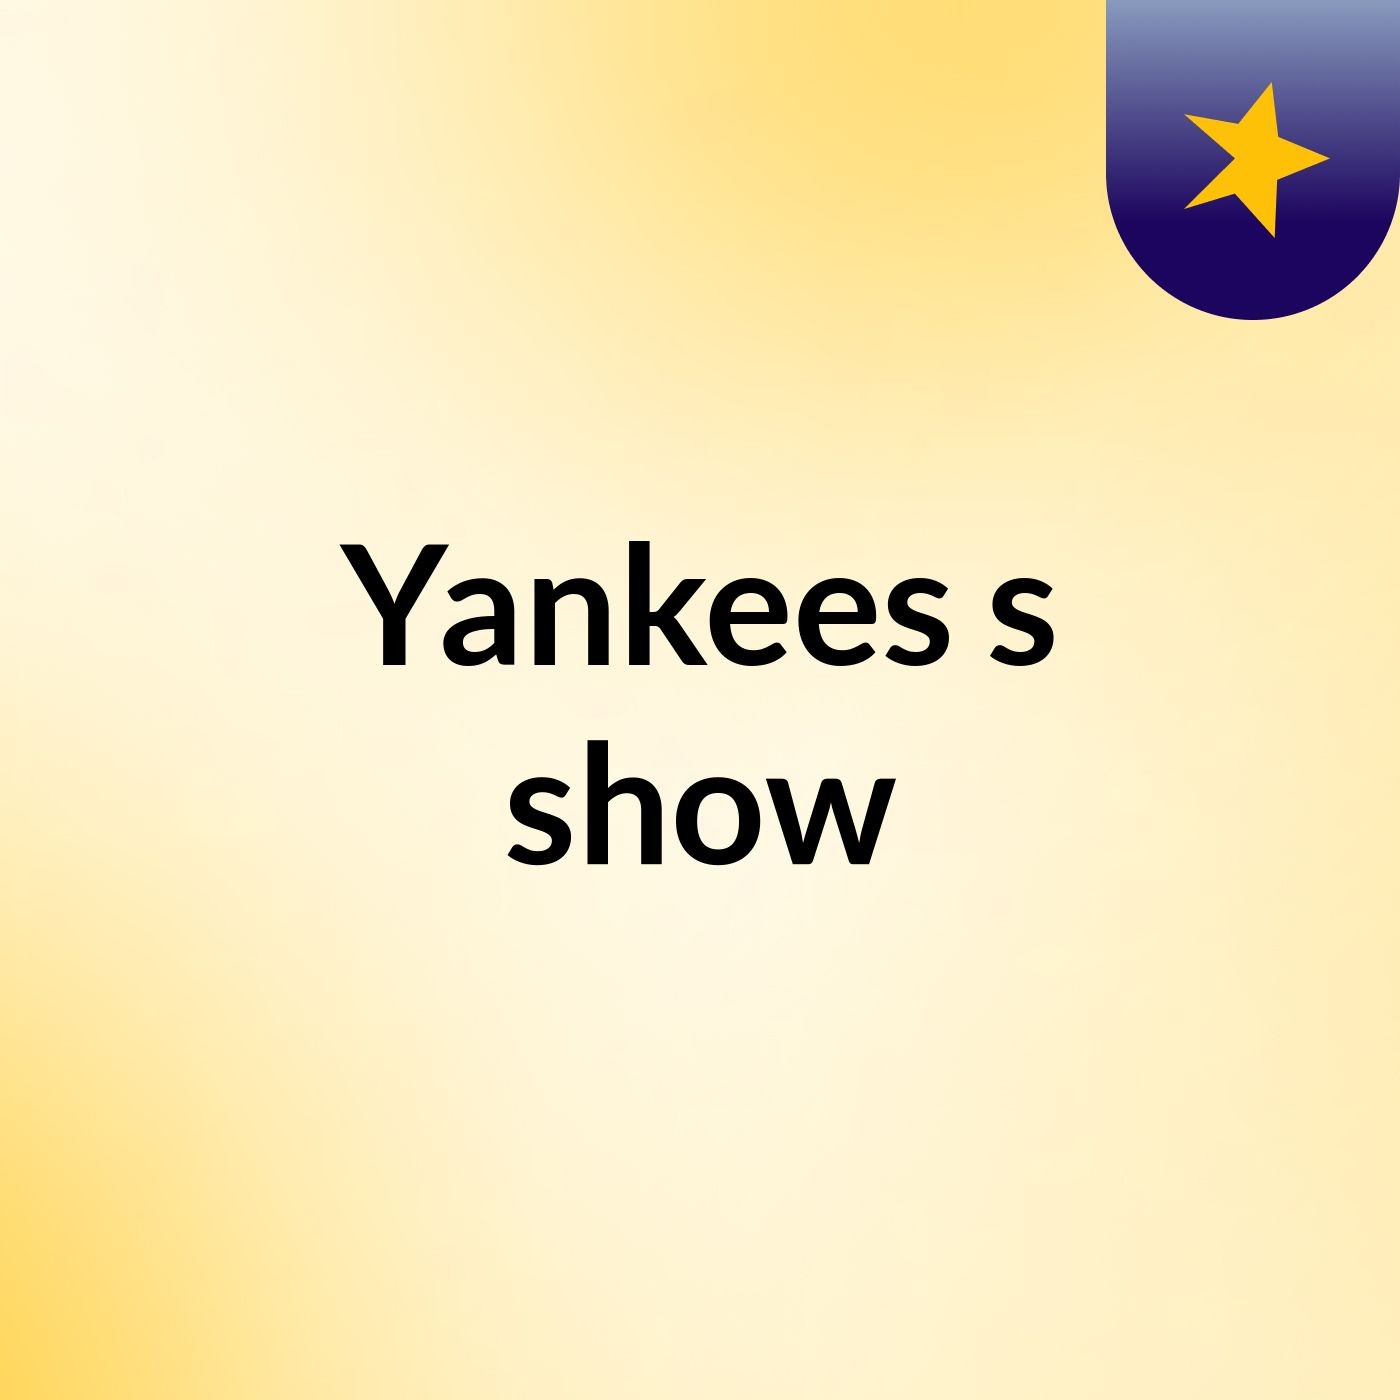 Yankees's show